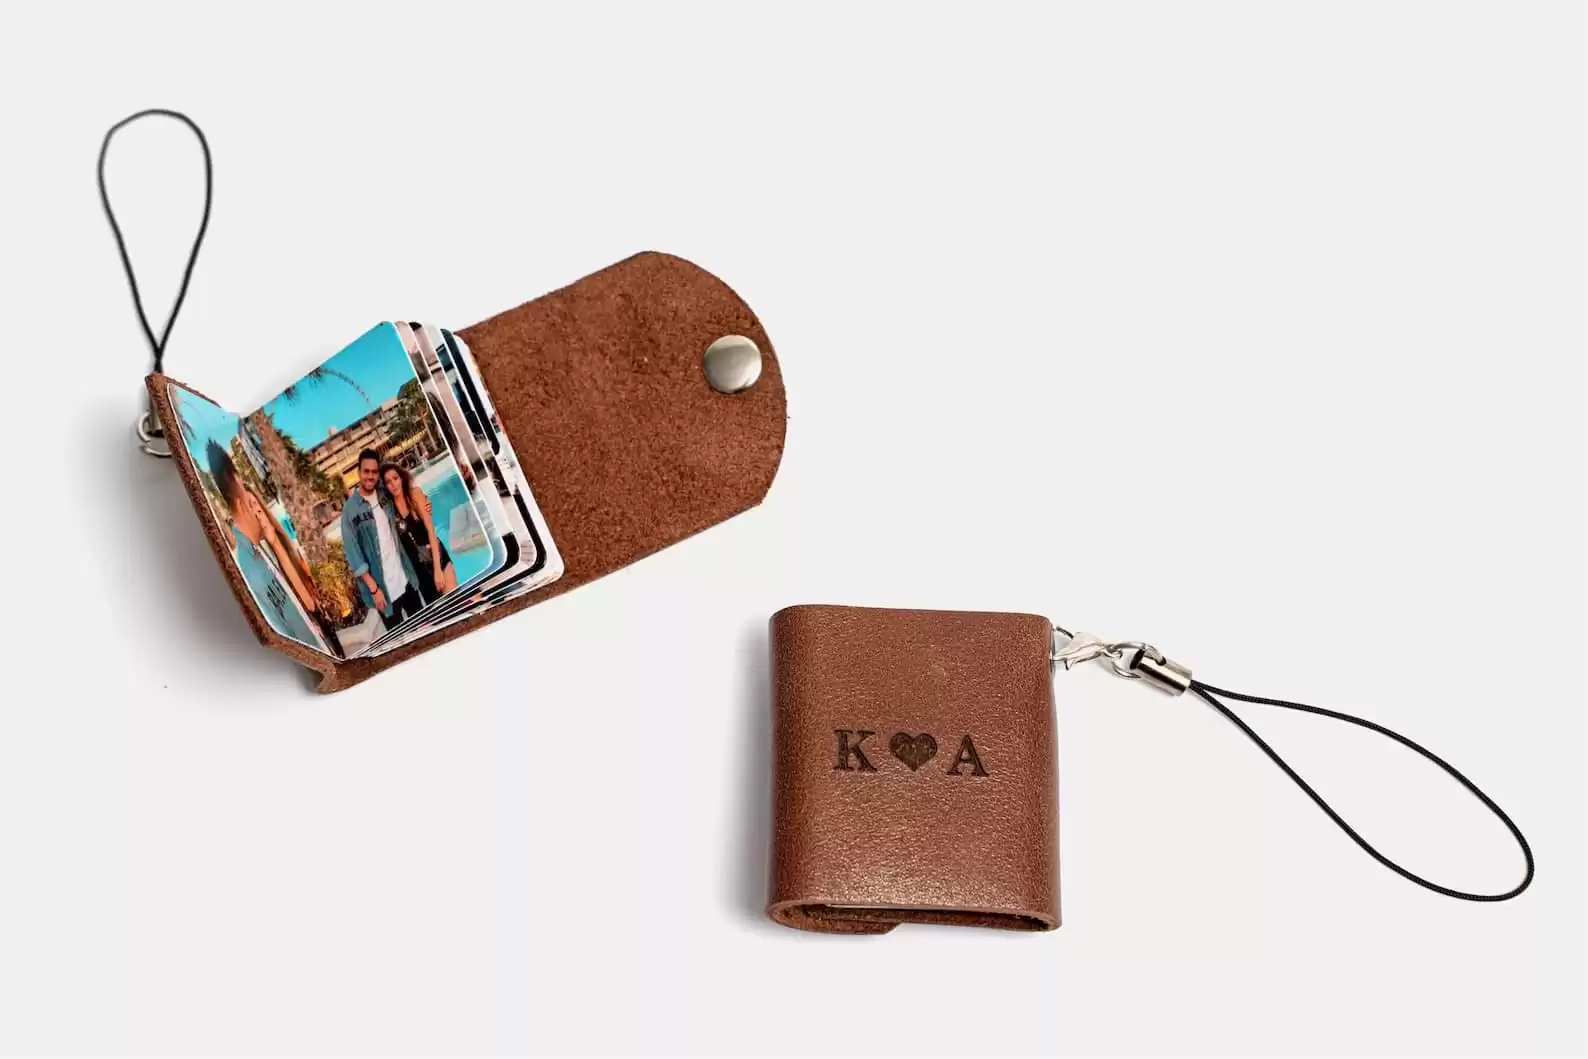 Personalized Leather Photo Keychain